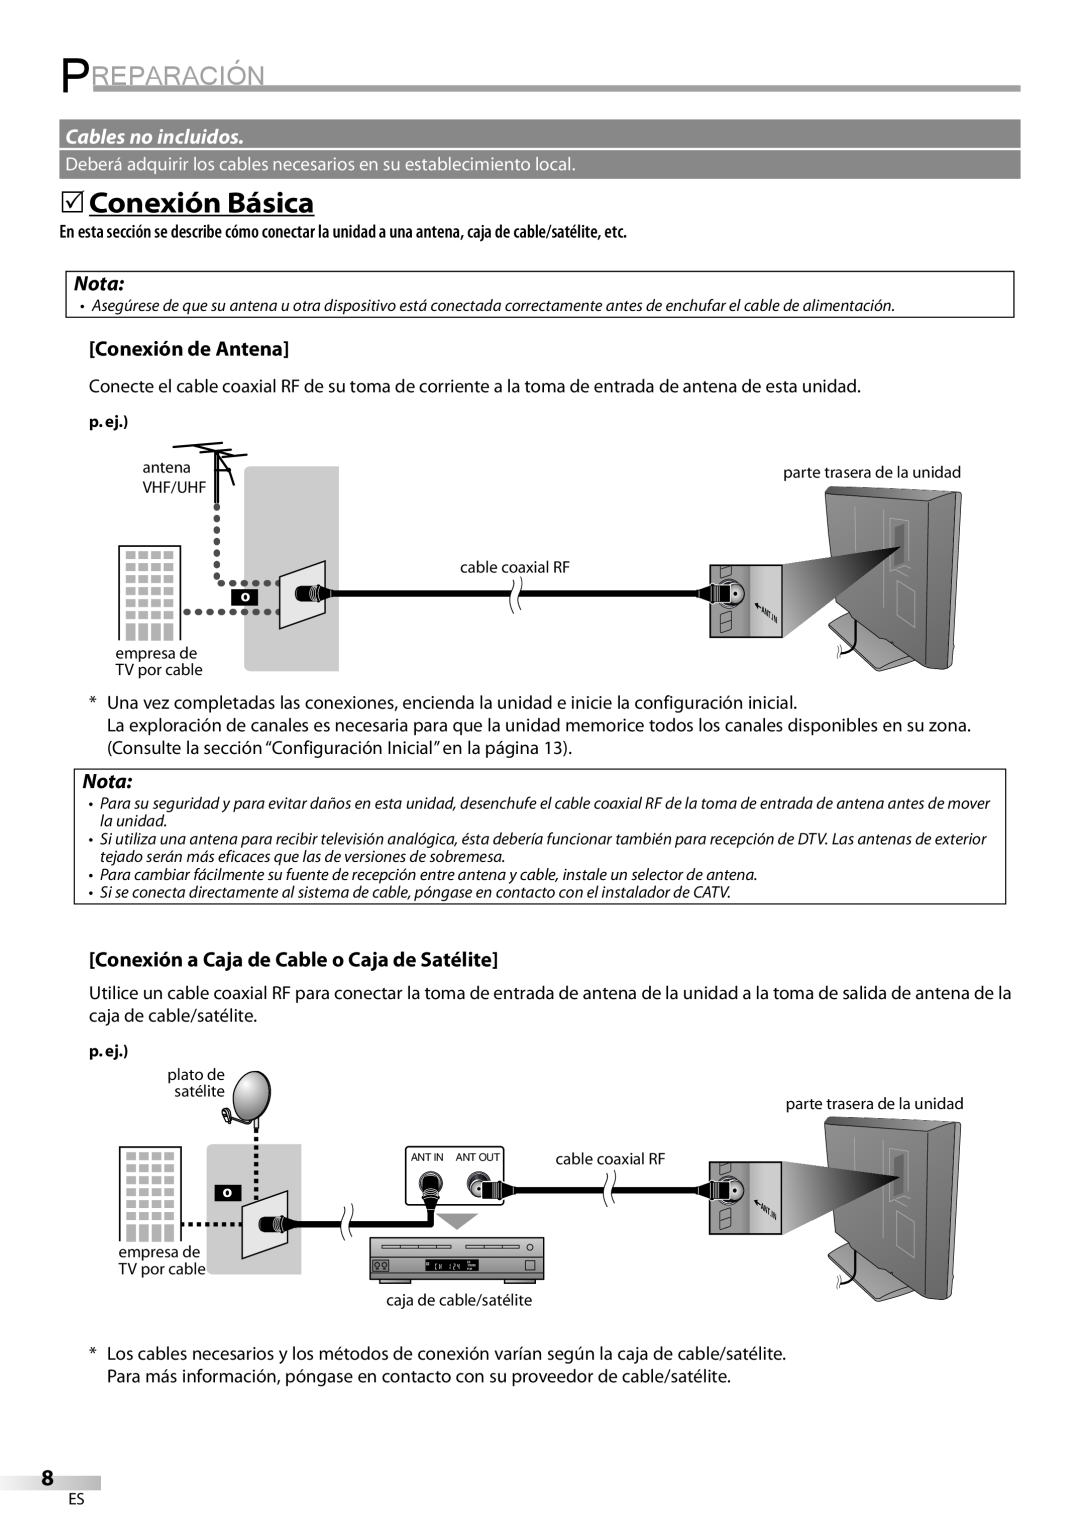 Emerson LC420EM8 owner manual Preparación, 5Conexión Básica, Cables no incluidos, Nota, Conexión de Antena 